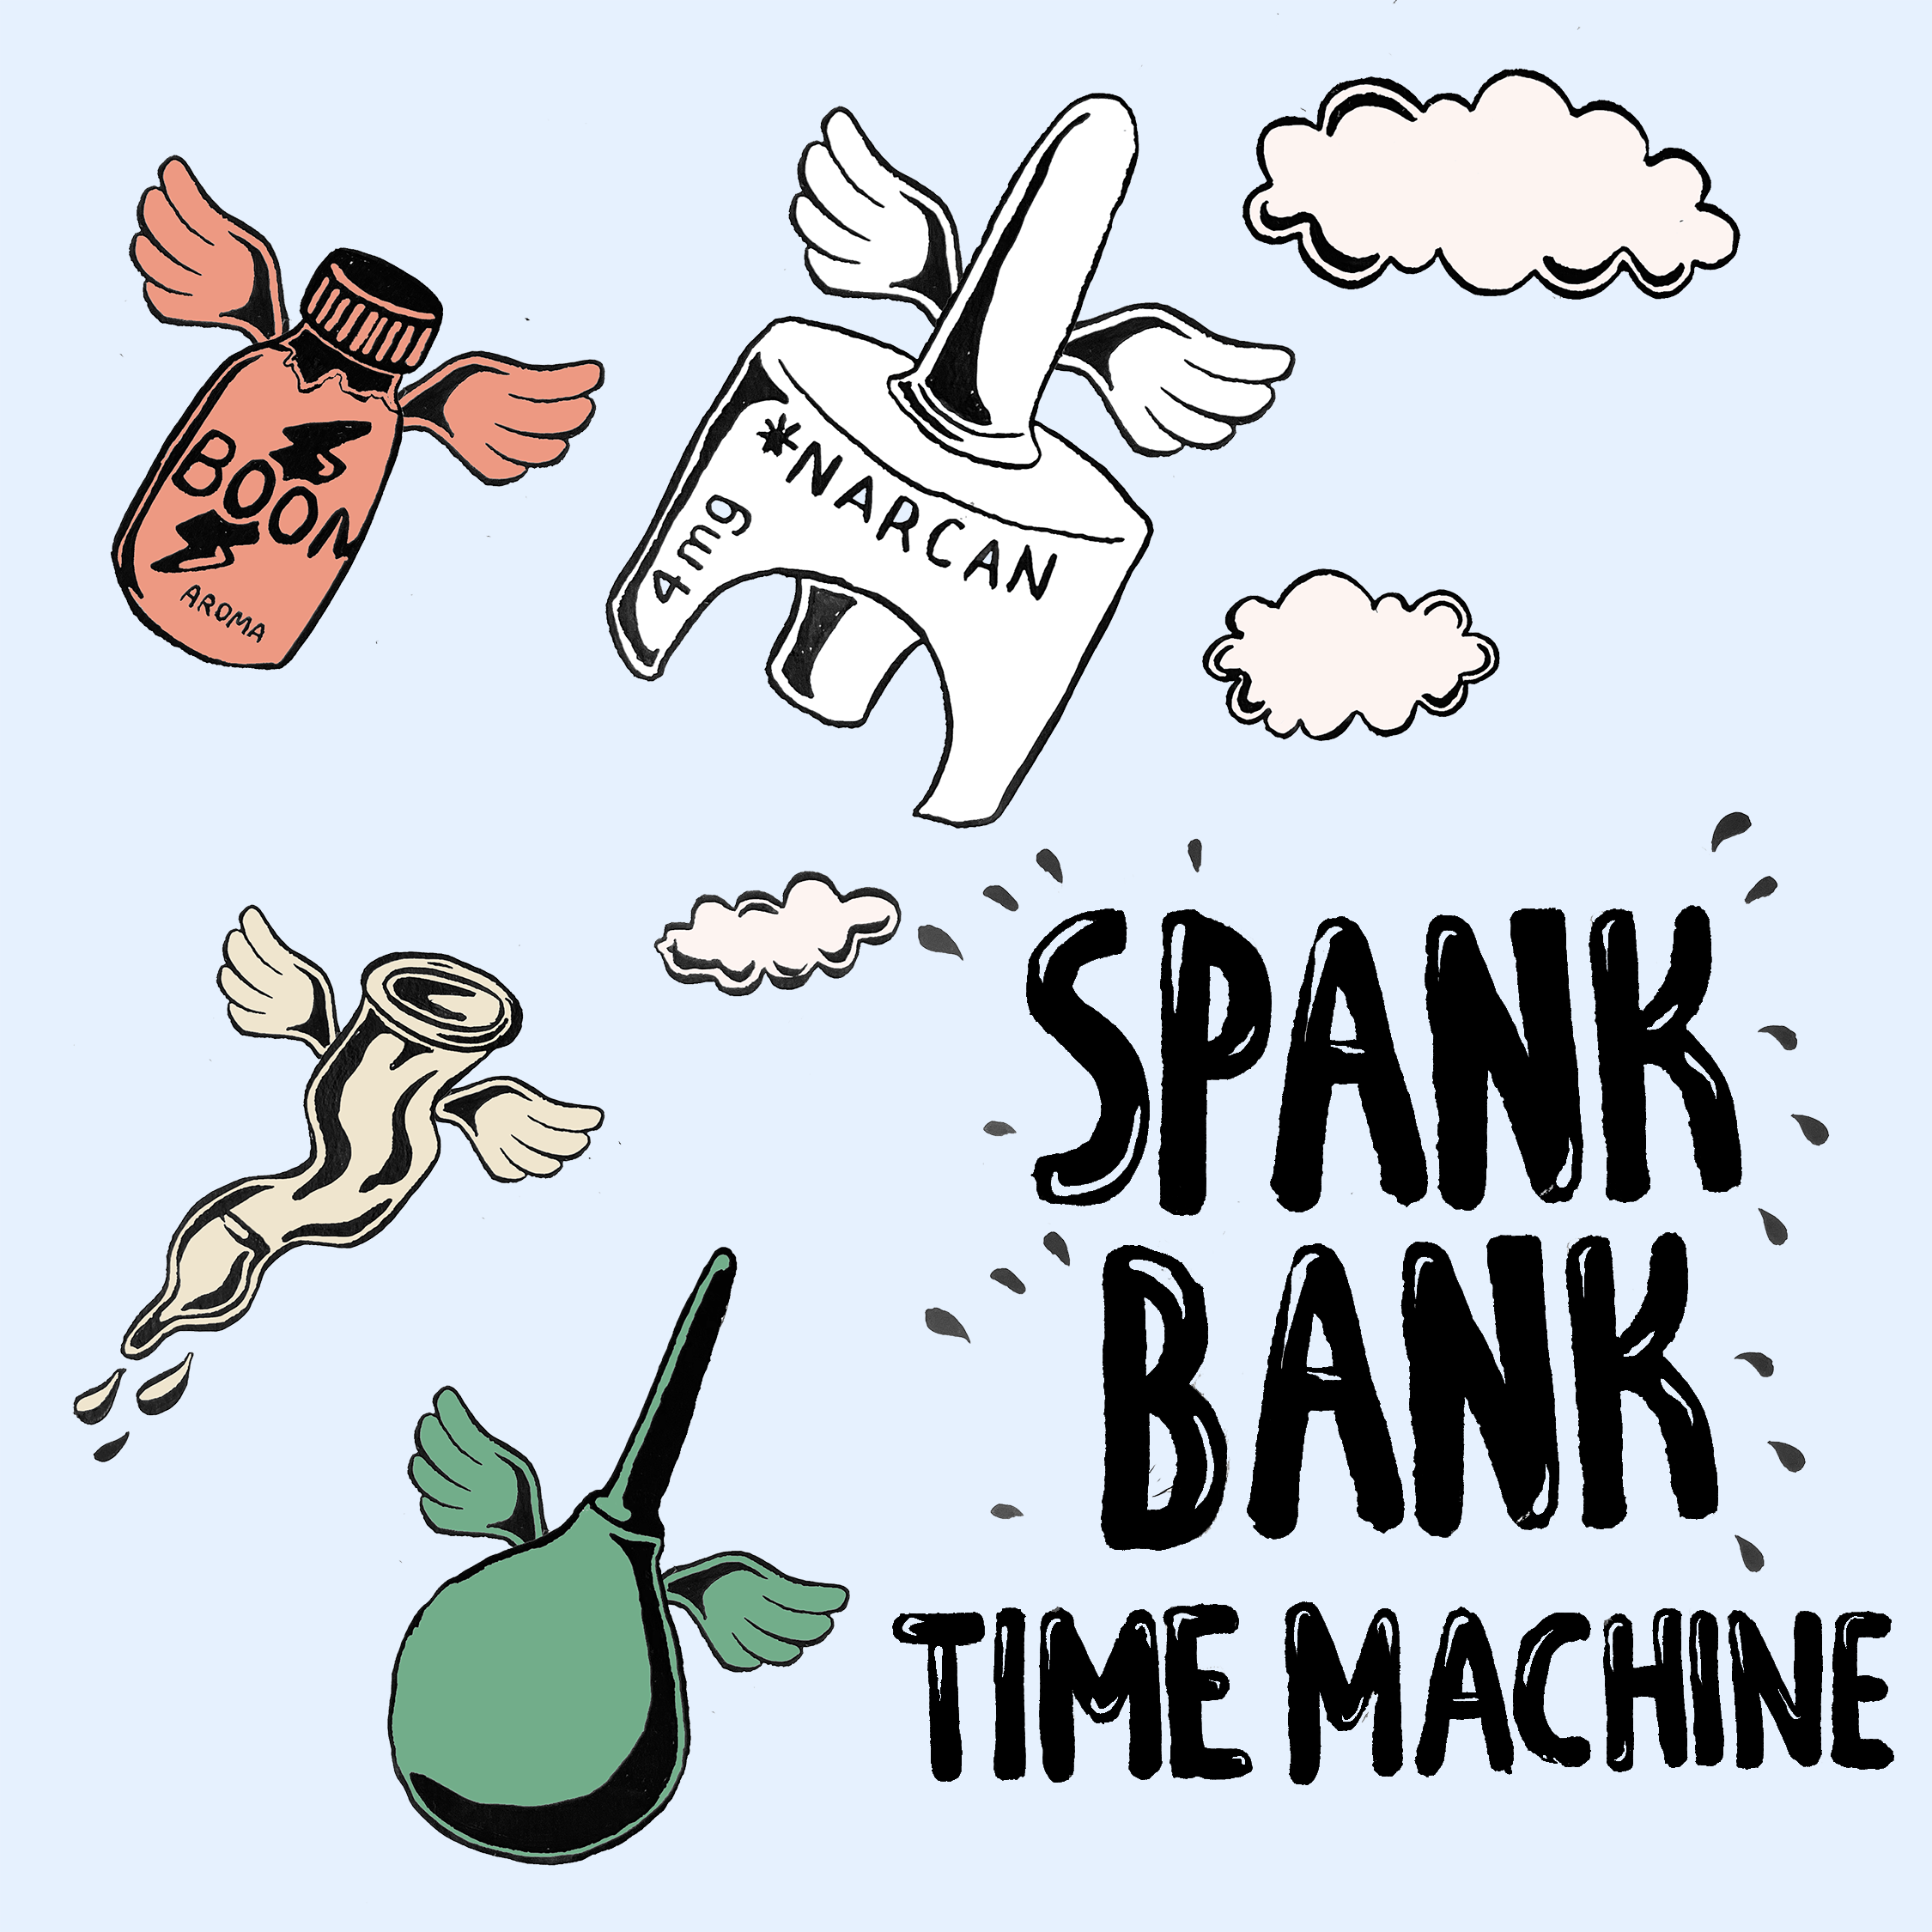 Spank Bank Time Machine